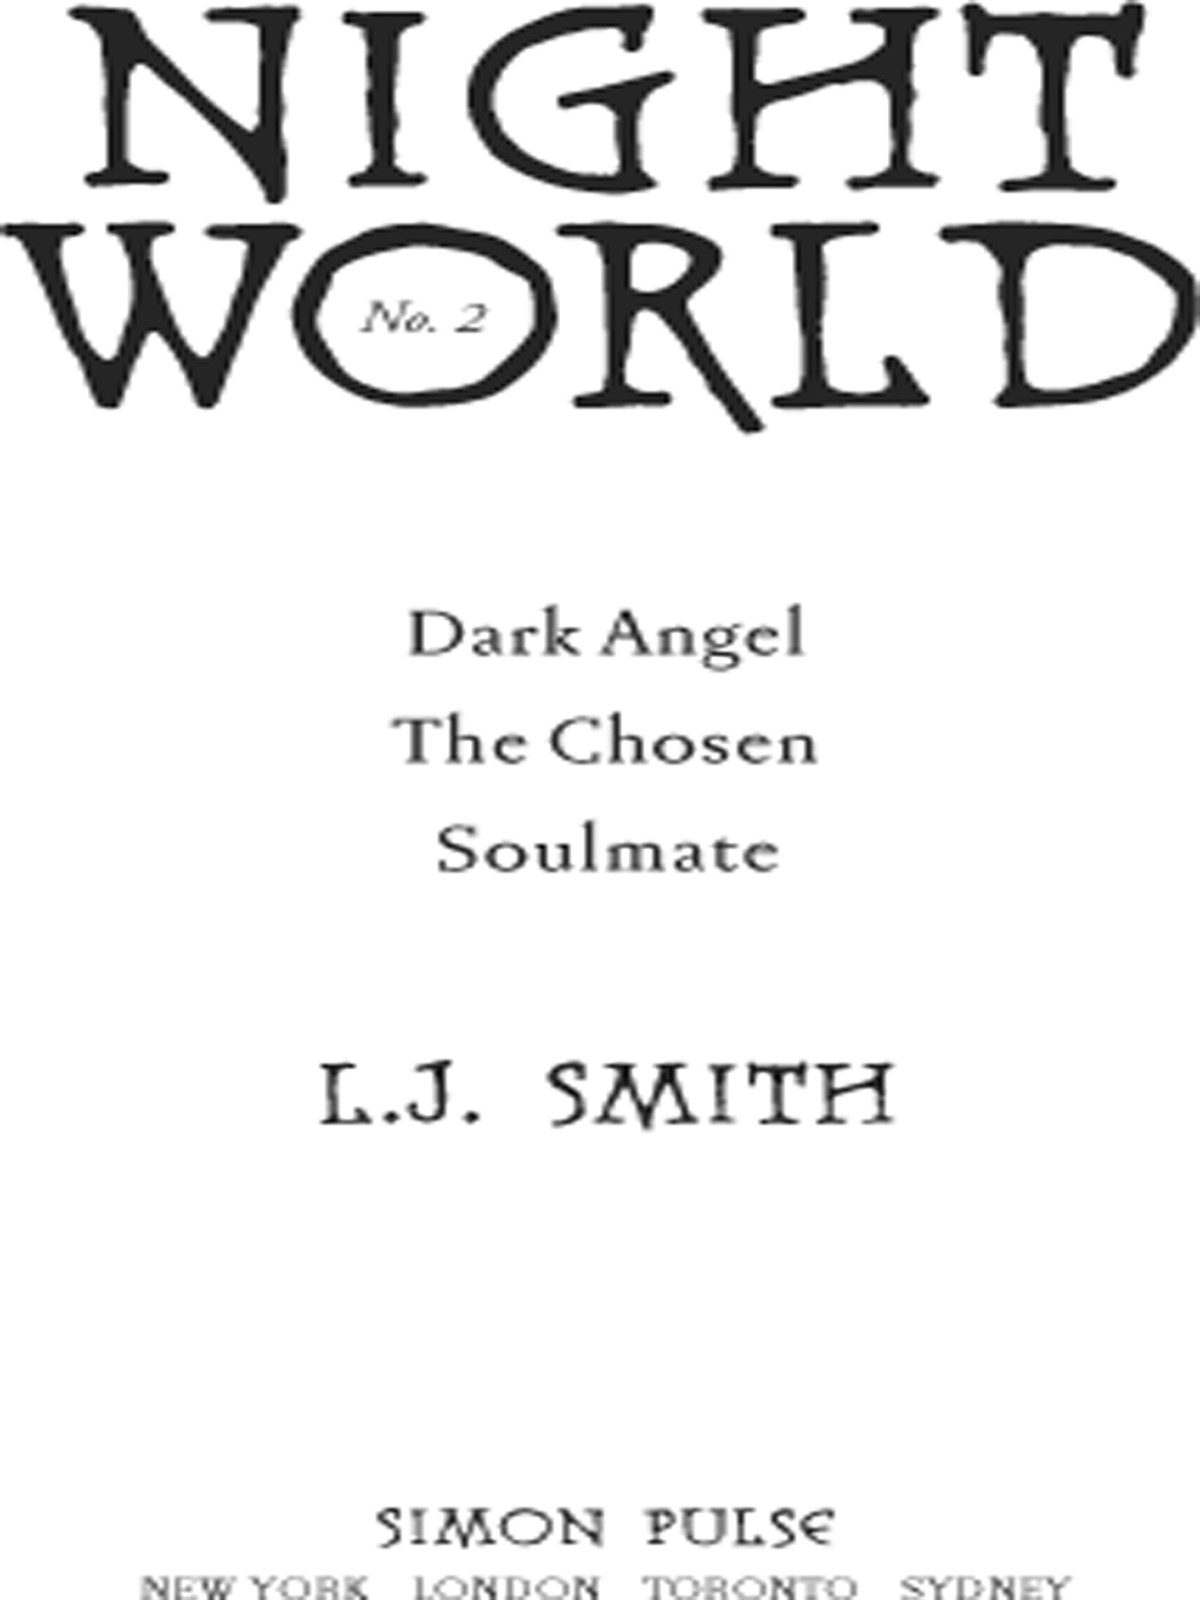 Dark Angel; The Chosen; Soulmate (1997) by L.J. Smith